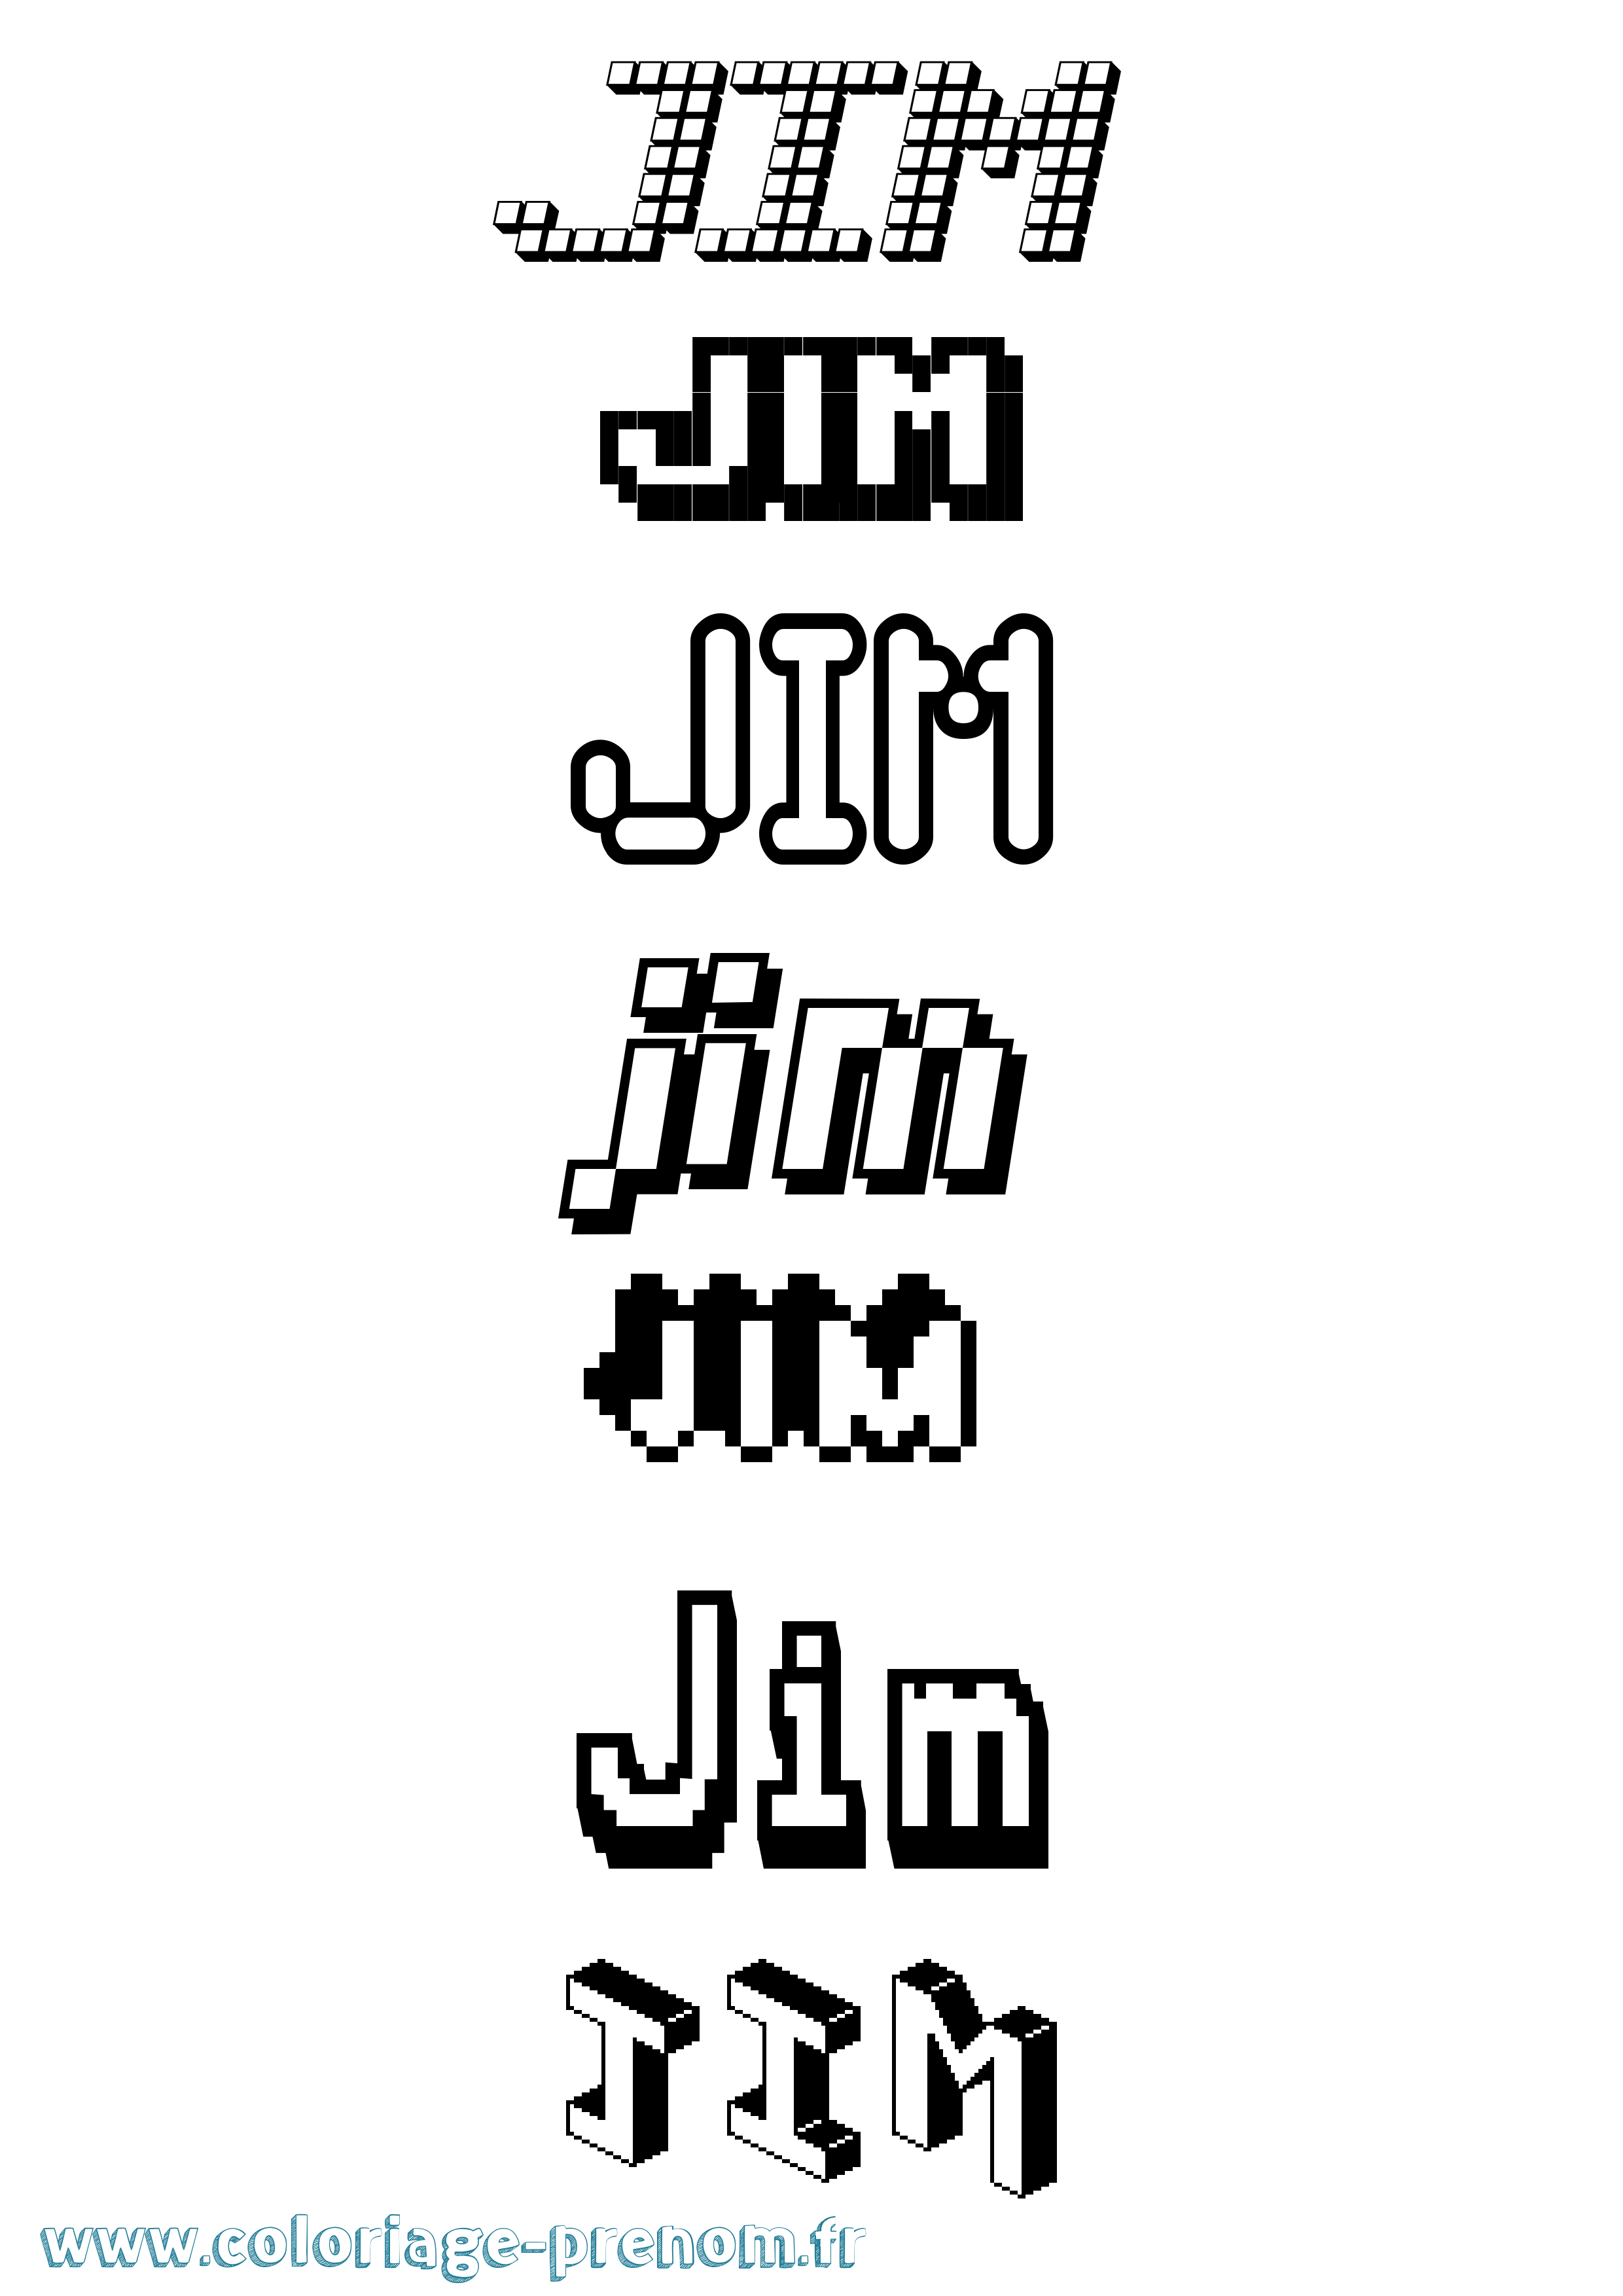 Coloriage prénom Jim